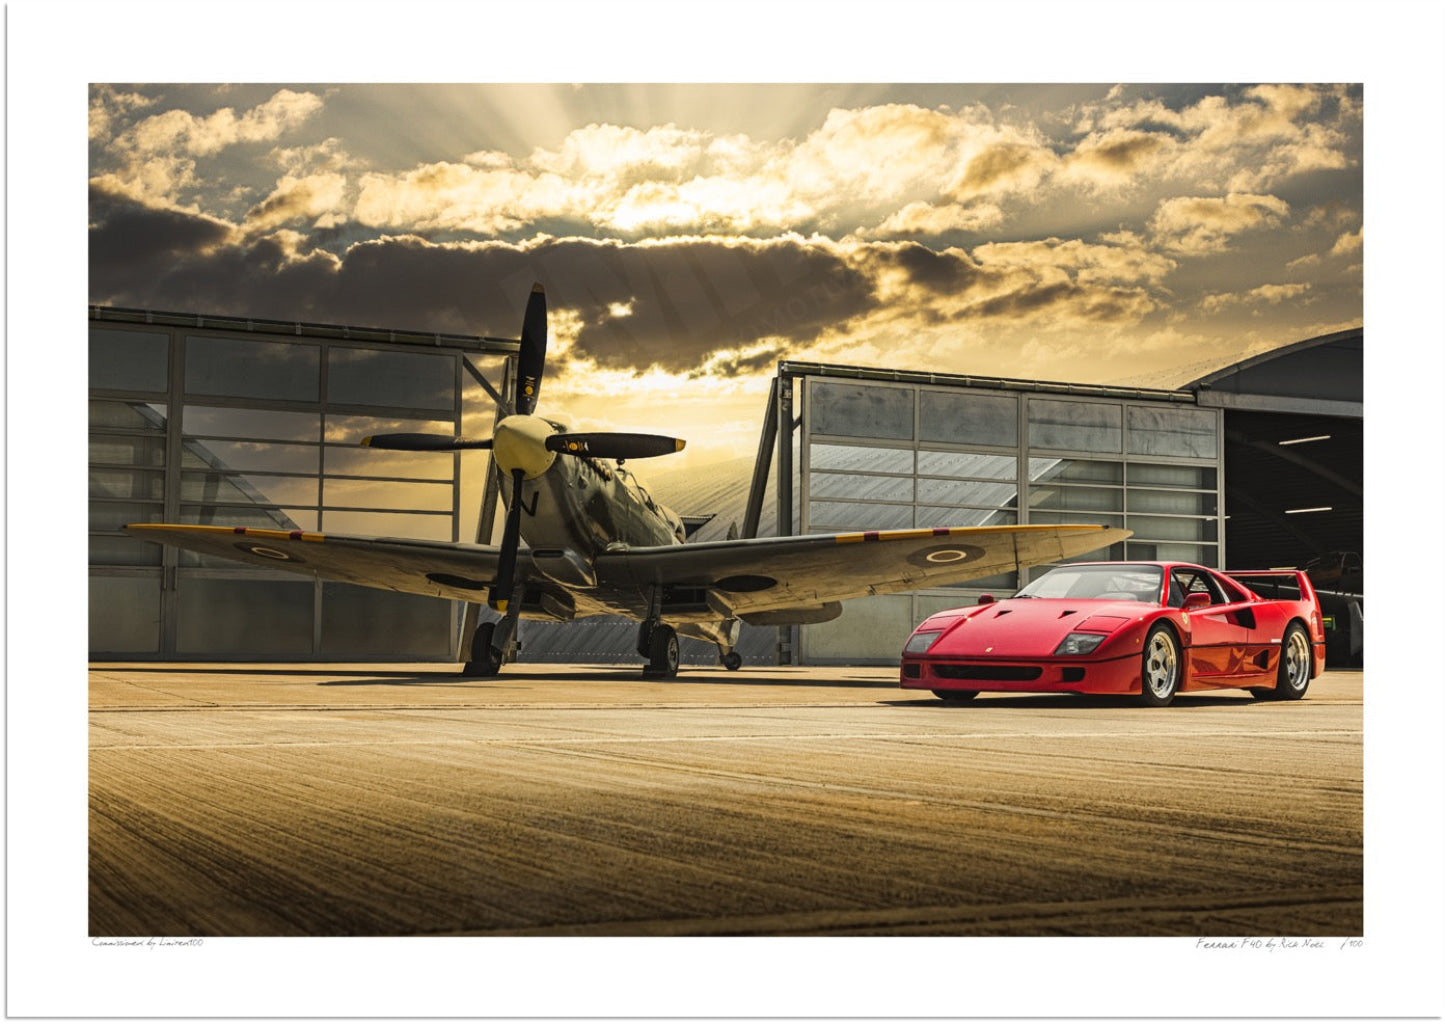 Ferrari F40 at Sywell Aerodrome